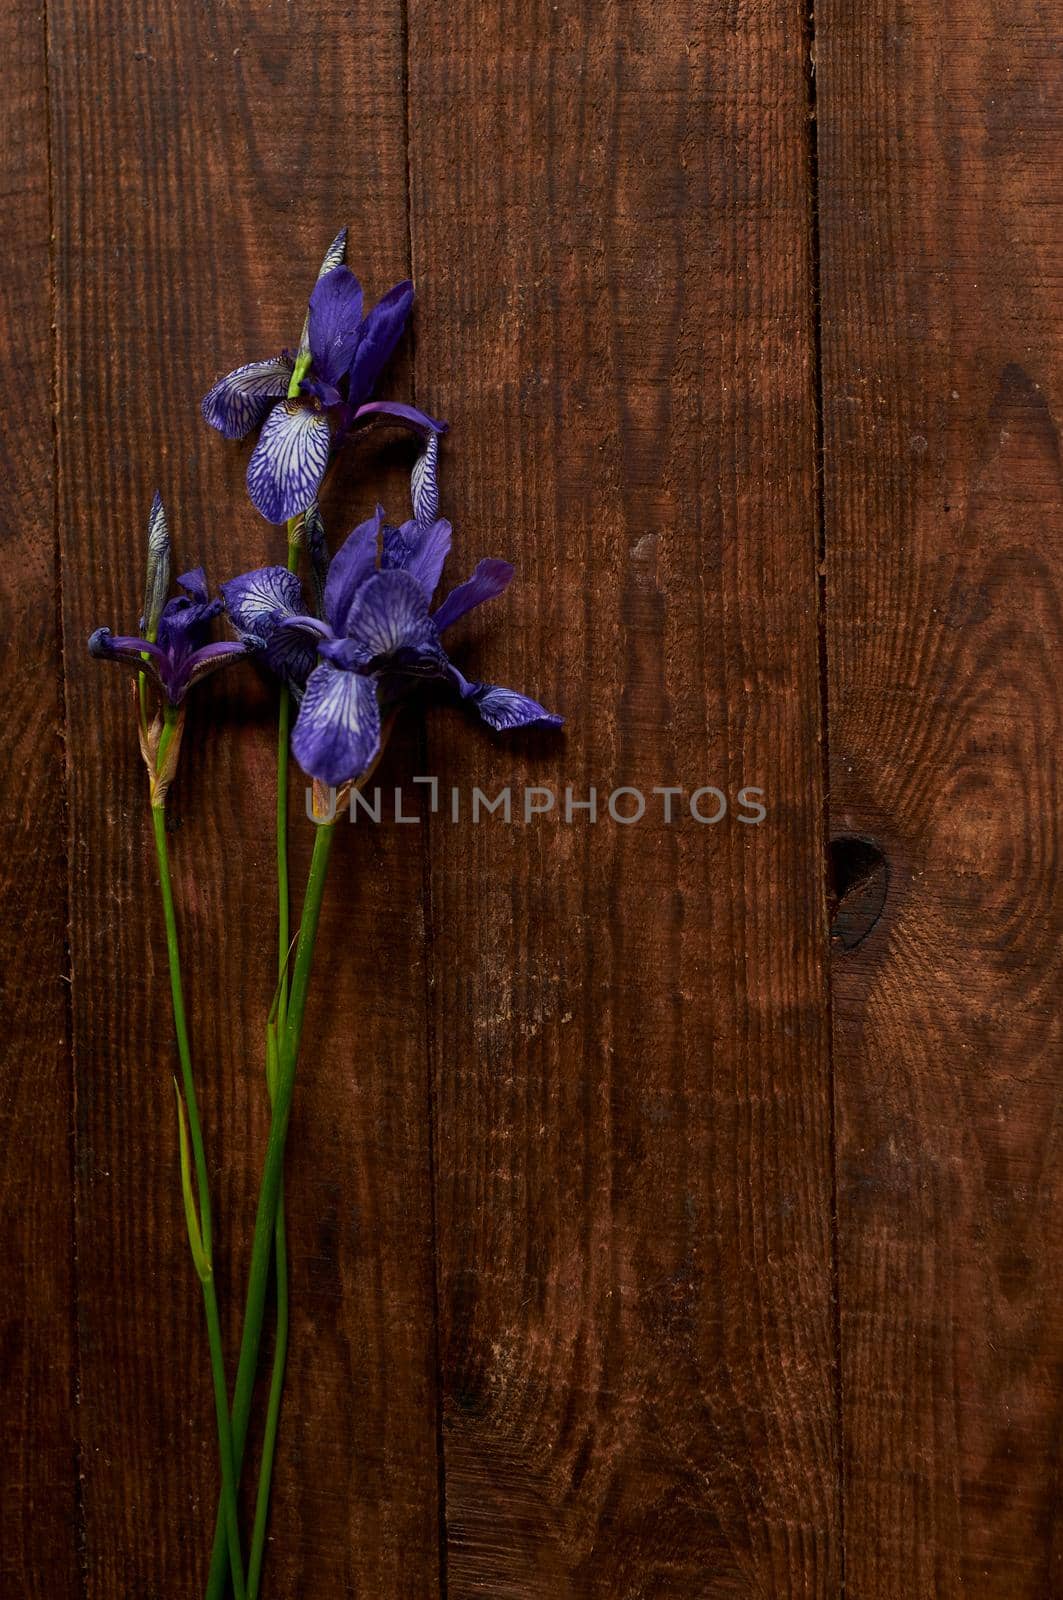 bouquet of wild purple iris flowers on brown wooden table